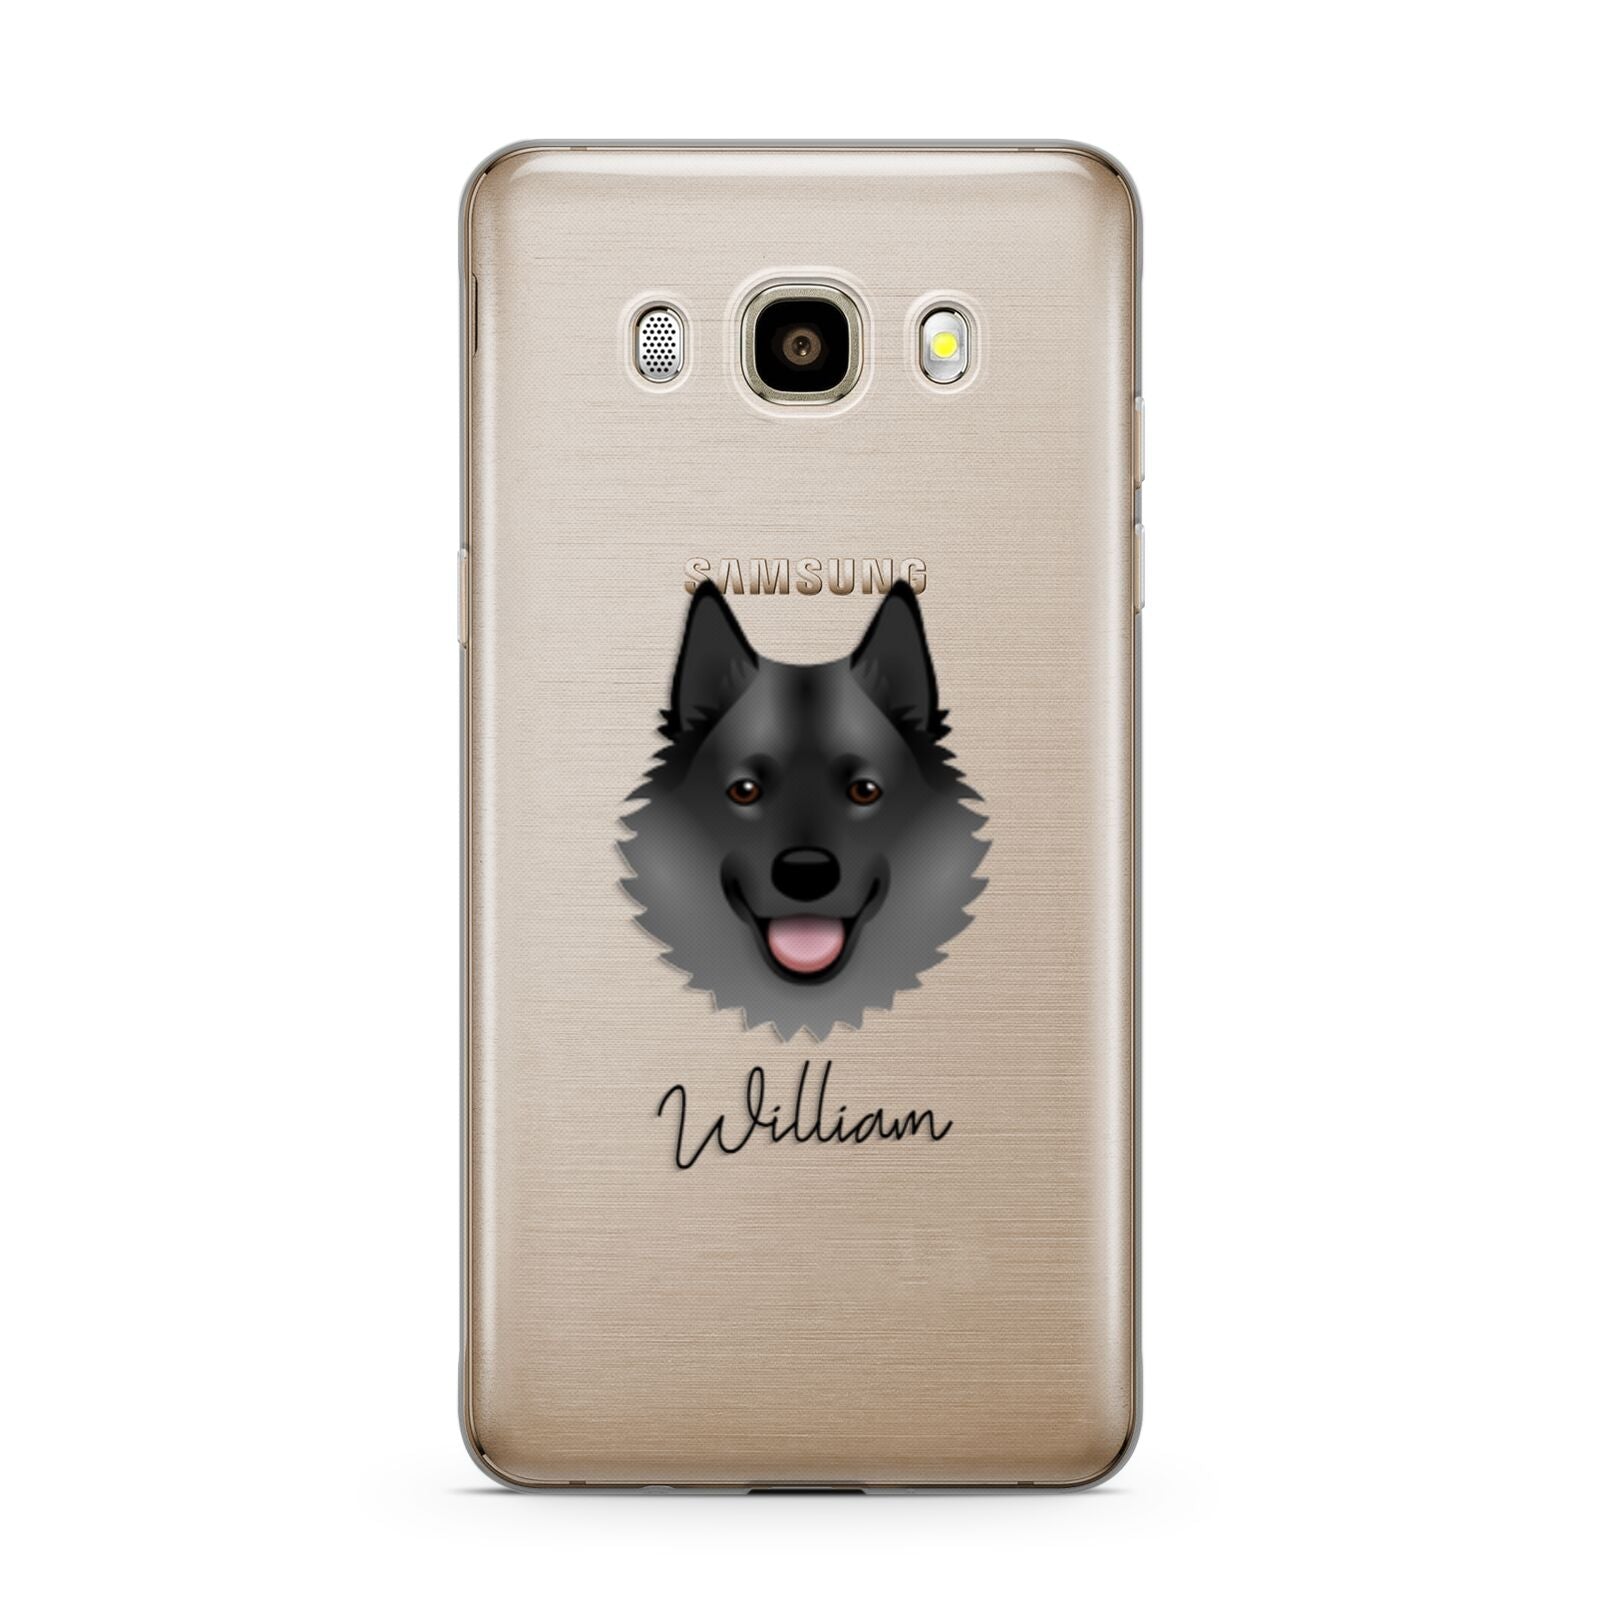 Norwegian Elkhound Personalised Samsung Galaxy J7 2016 Case on gold phone